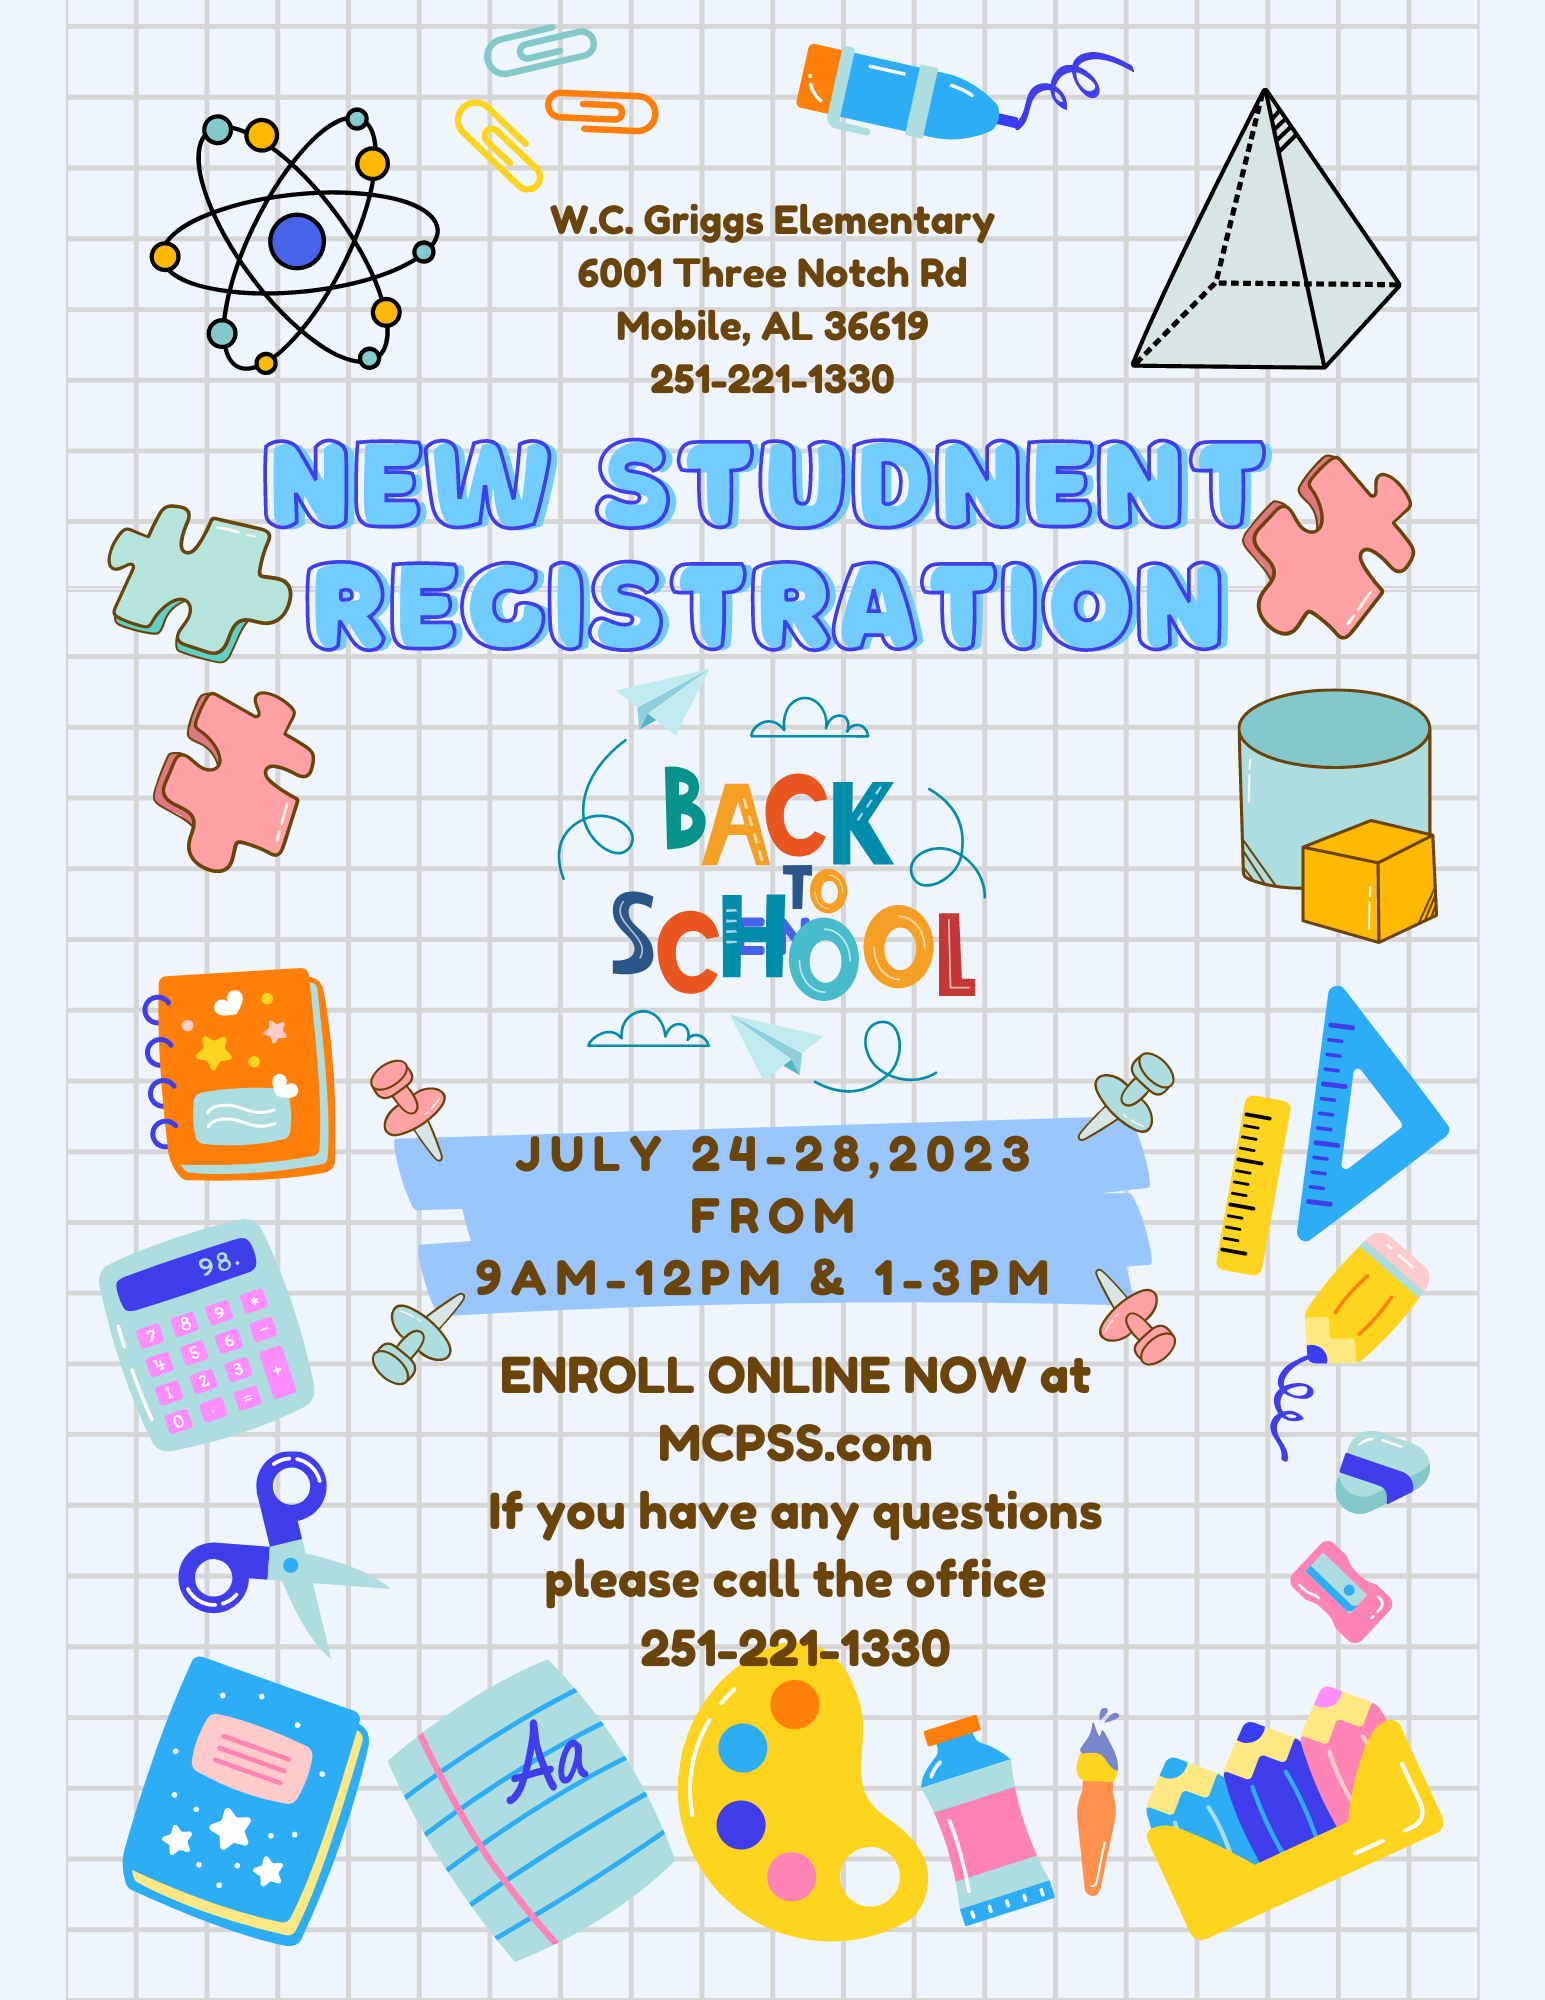 Online new student registration for July 